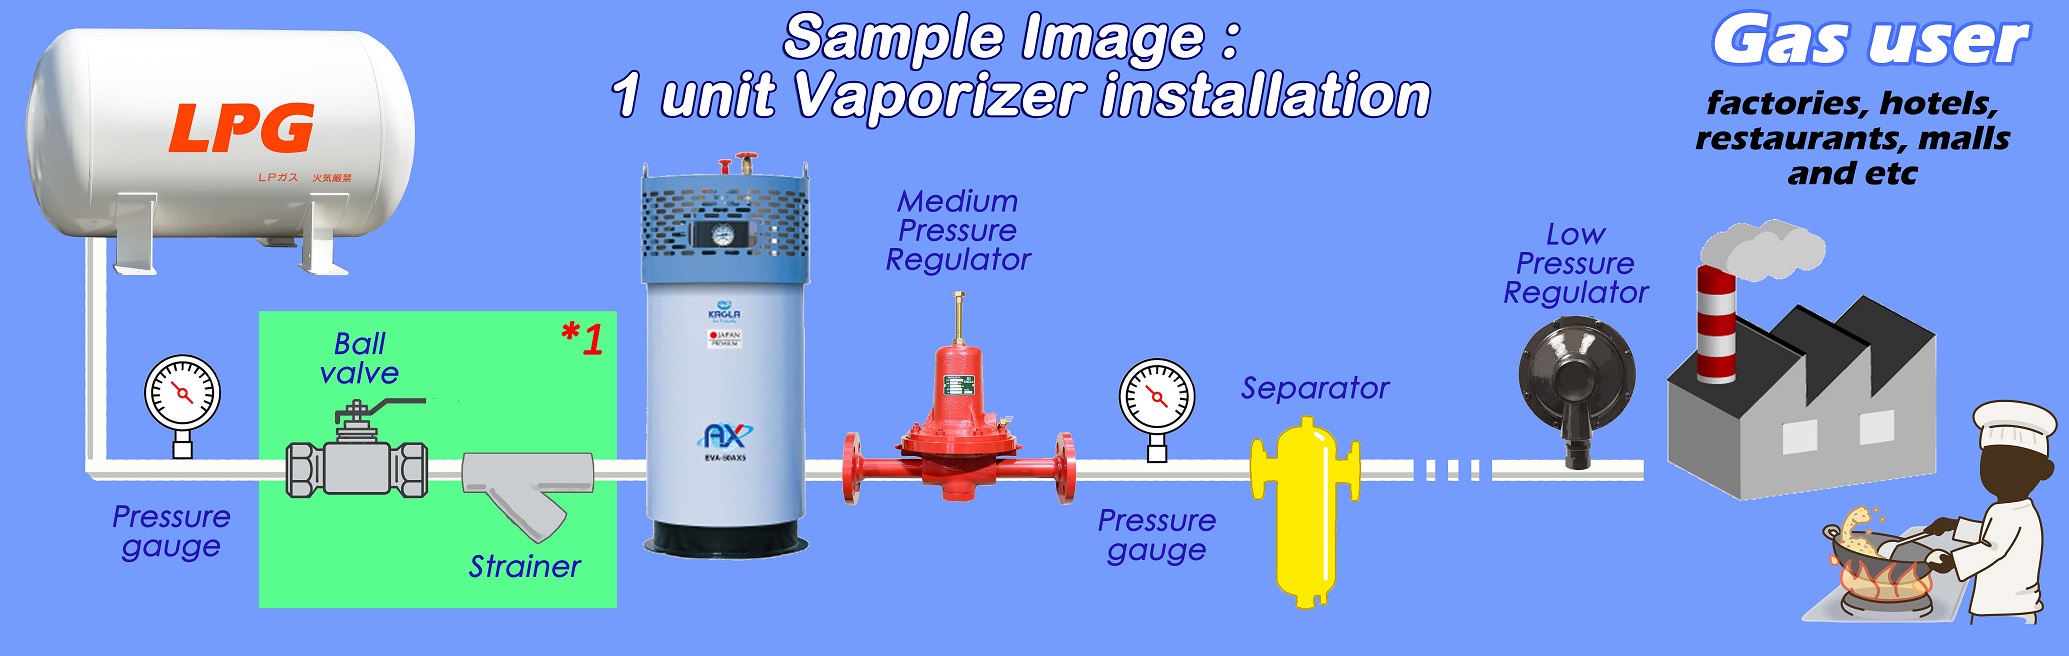 Installation image of AX5 vaporizer